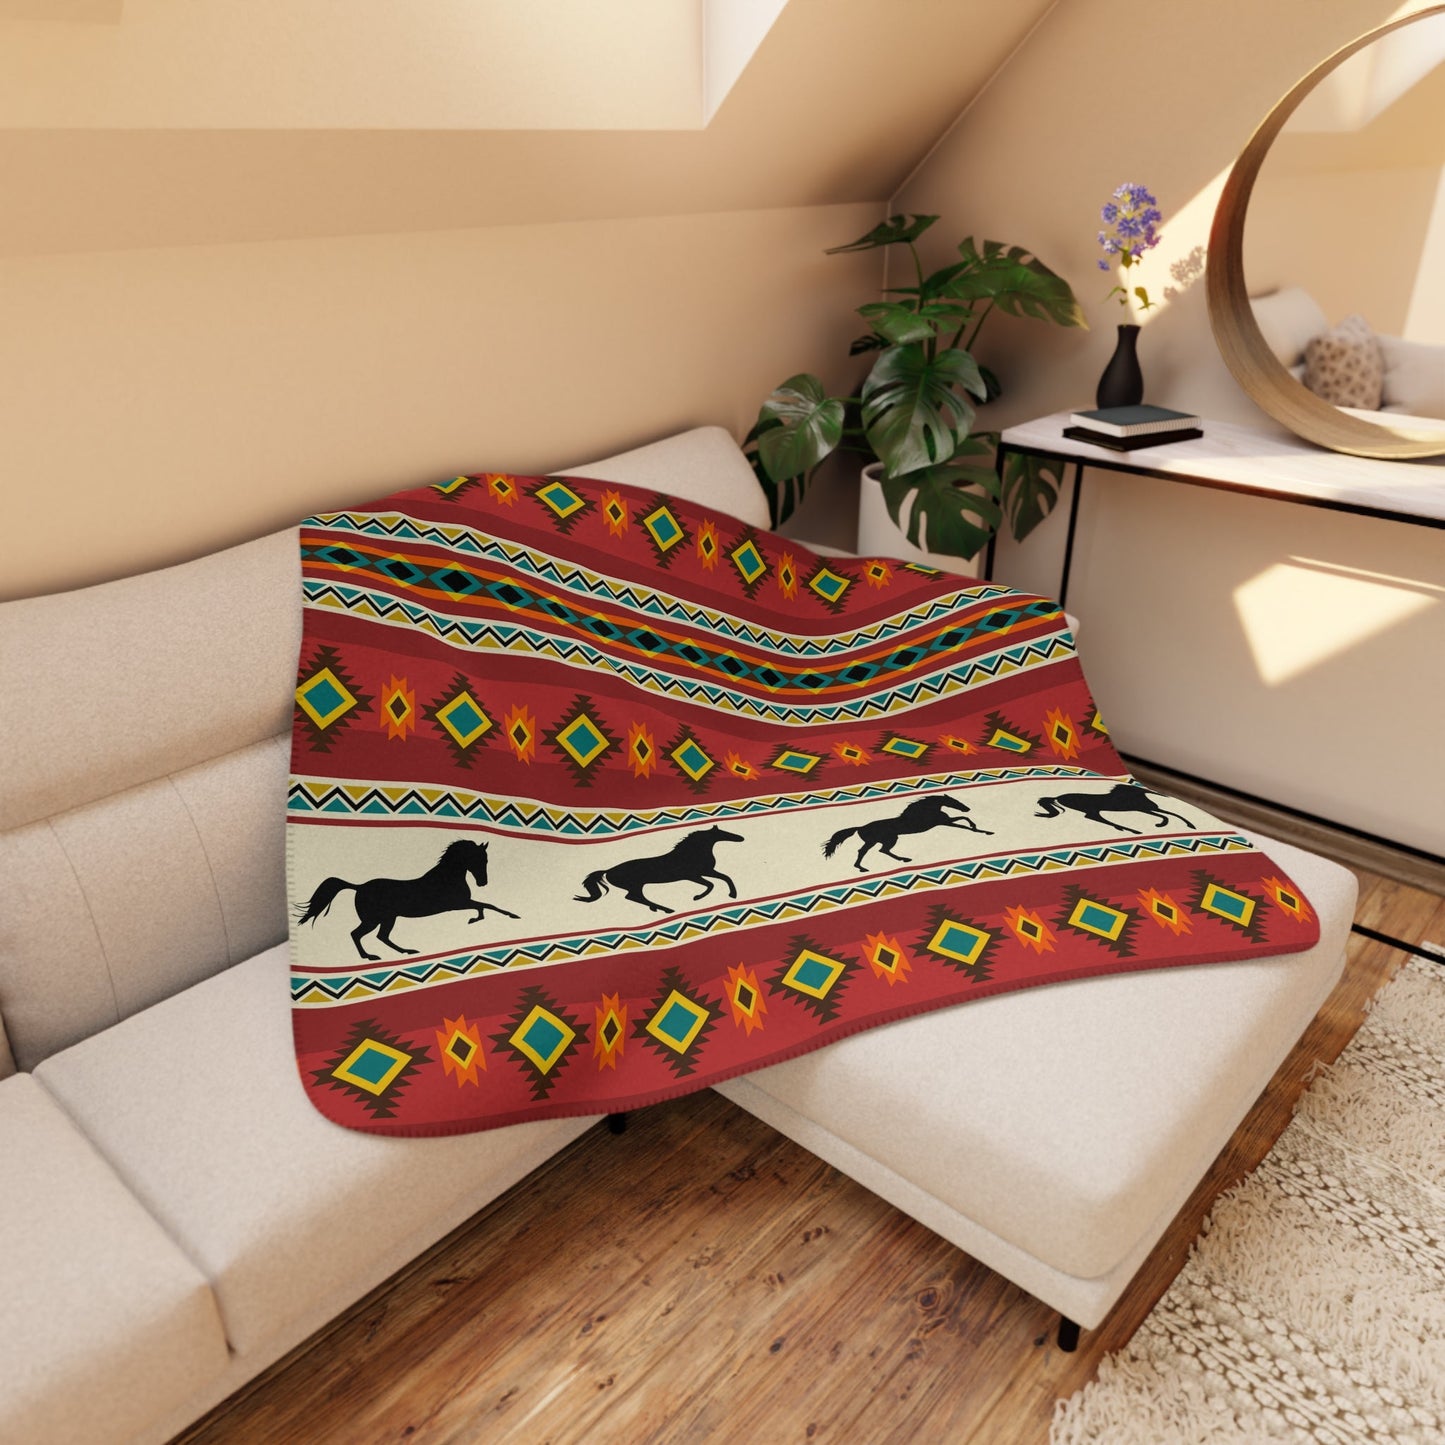 Southwest Native American Pattern Sherpa Blanket - Navaho Inspired Tribal Design - FlooredByArt